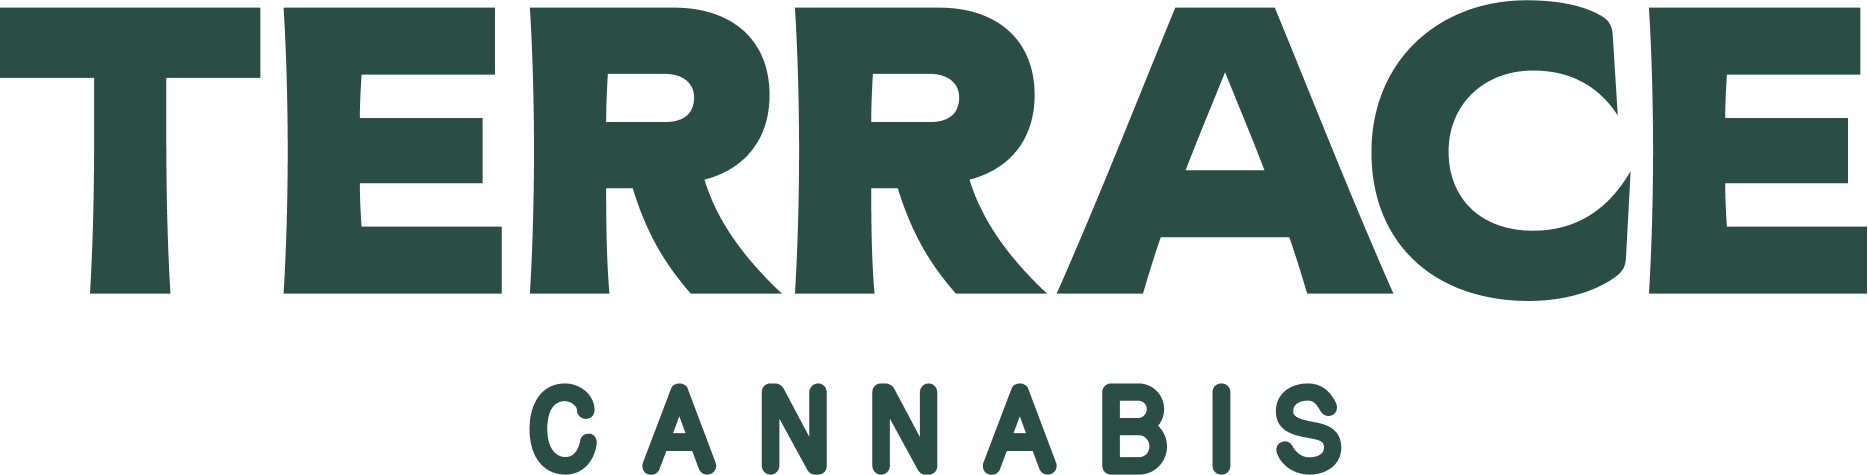 Terrace Dispensary logo